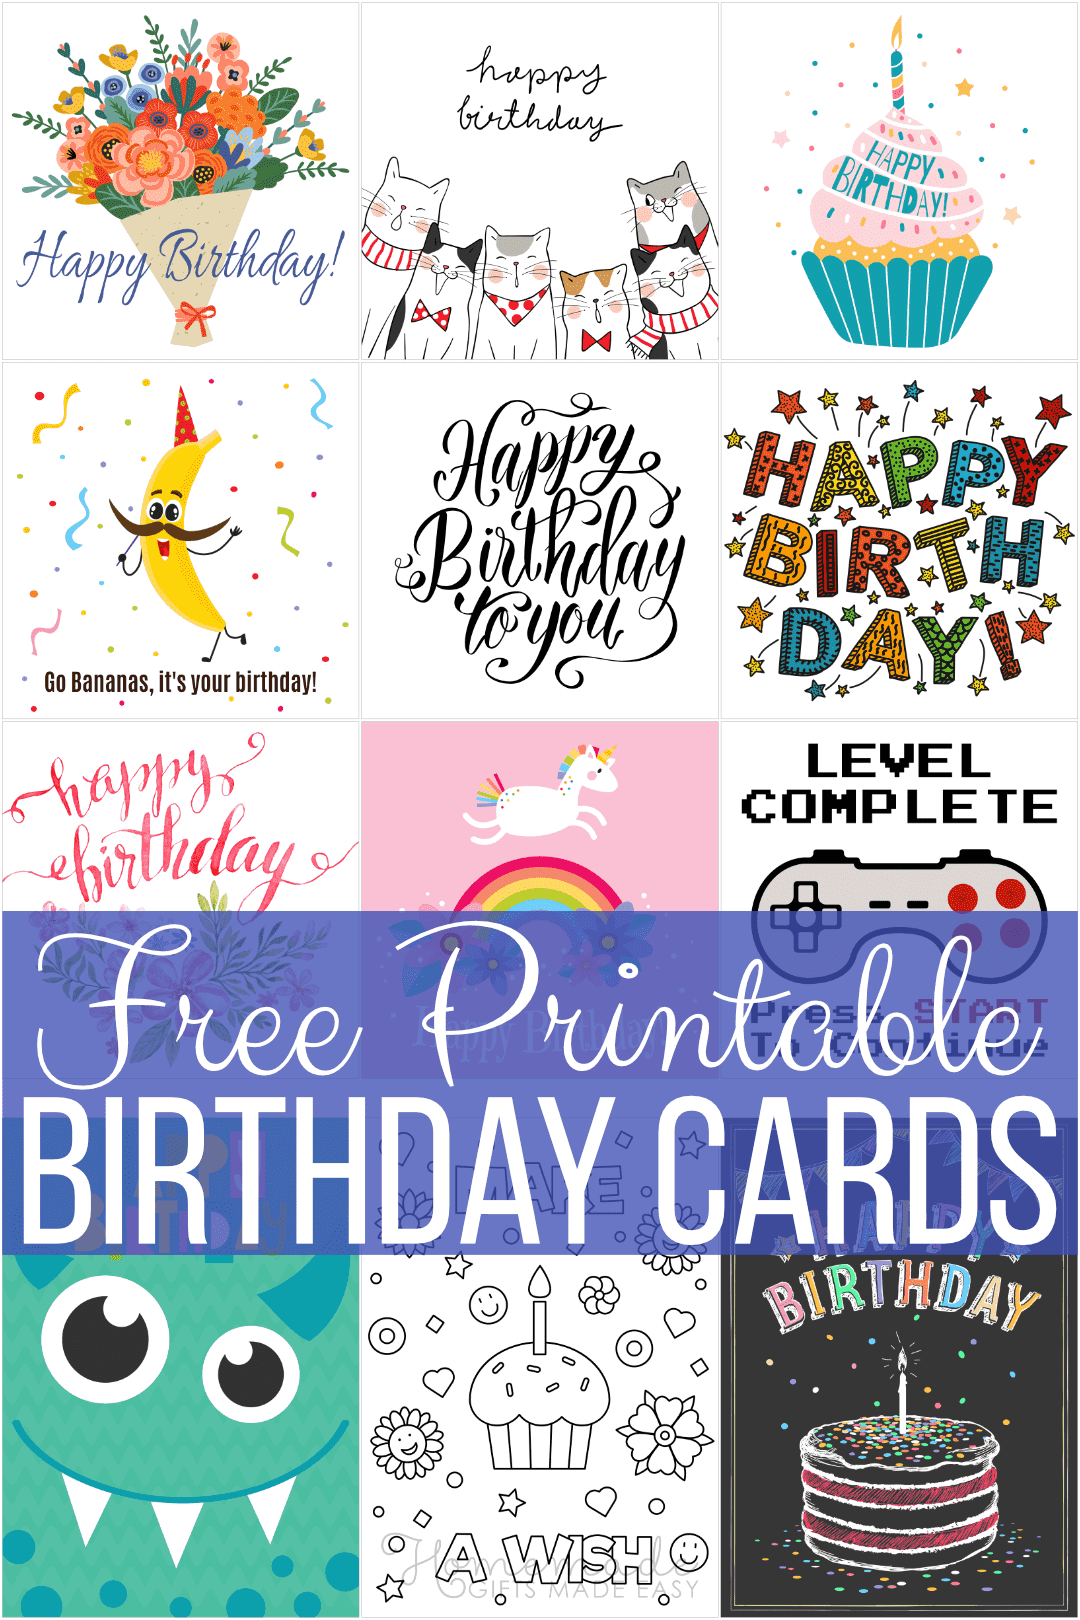 Printable Birthday Cards Coworker